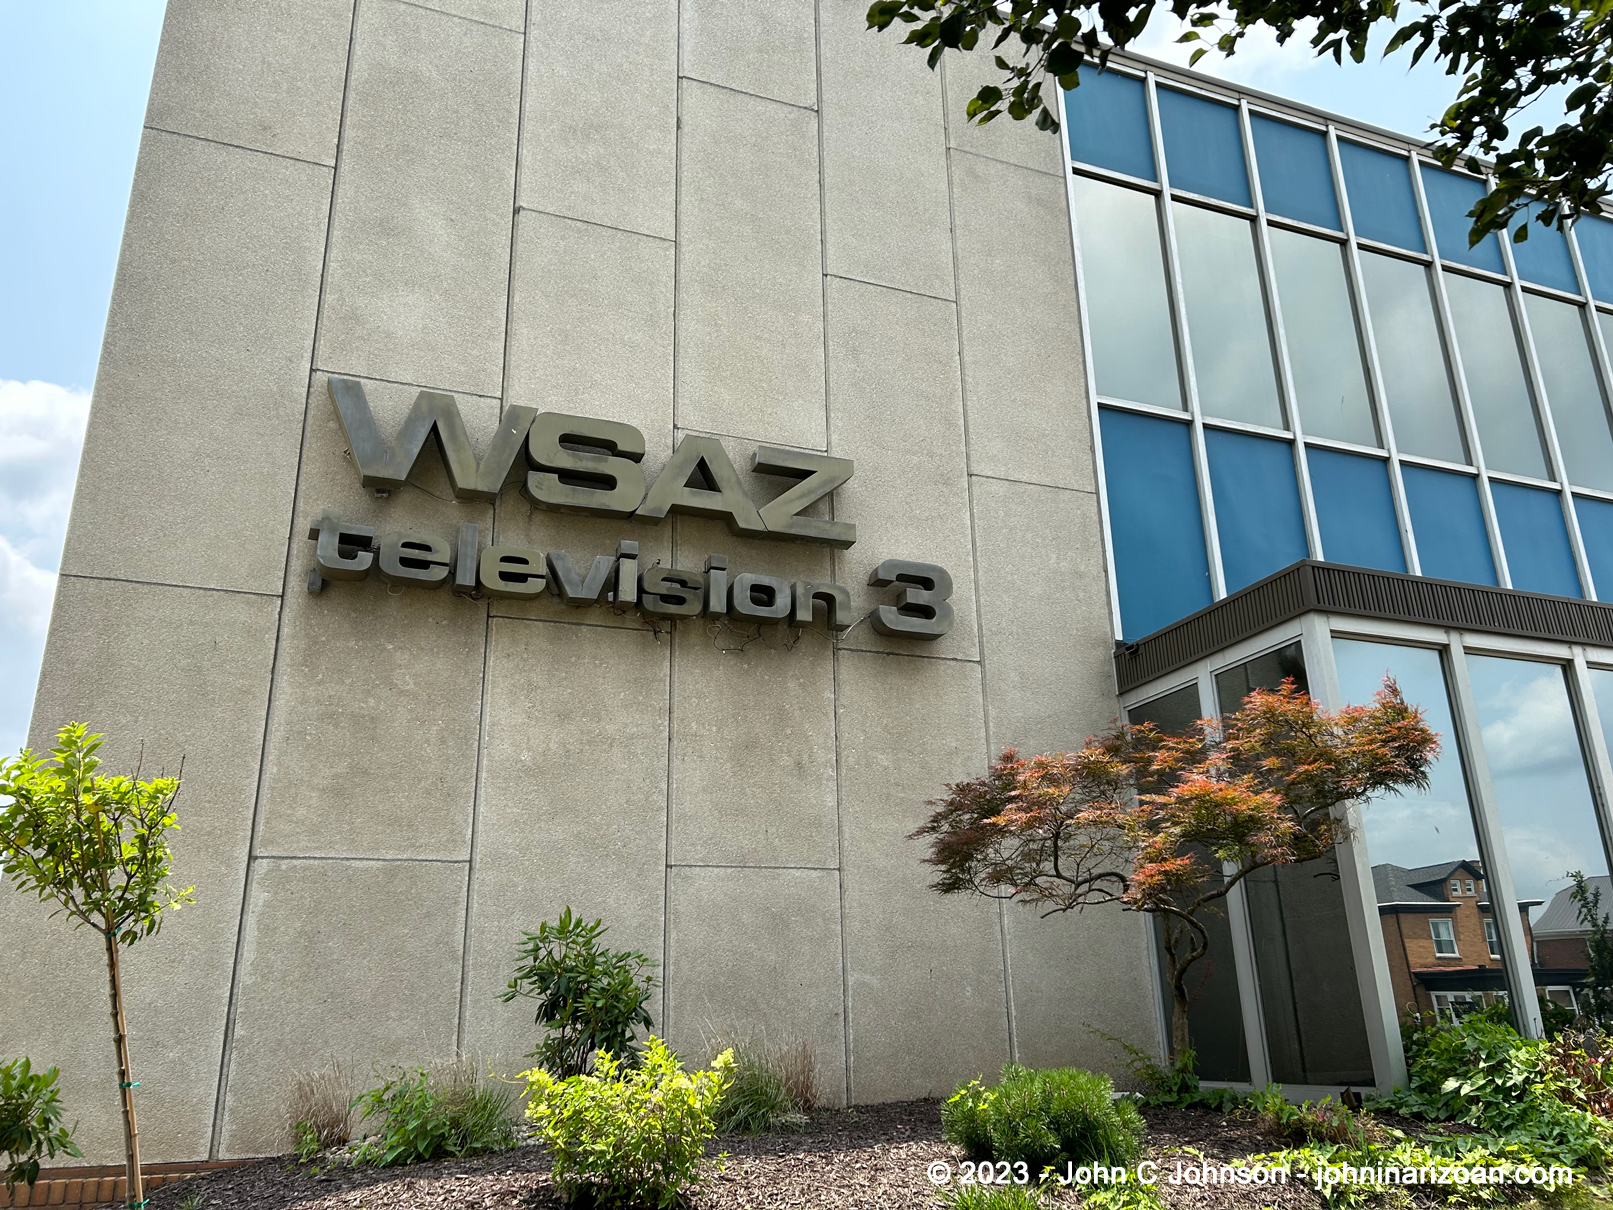 WSAZ TV Channel 3 Huntington, West Virginia